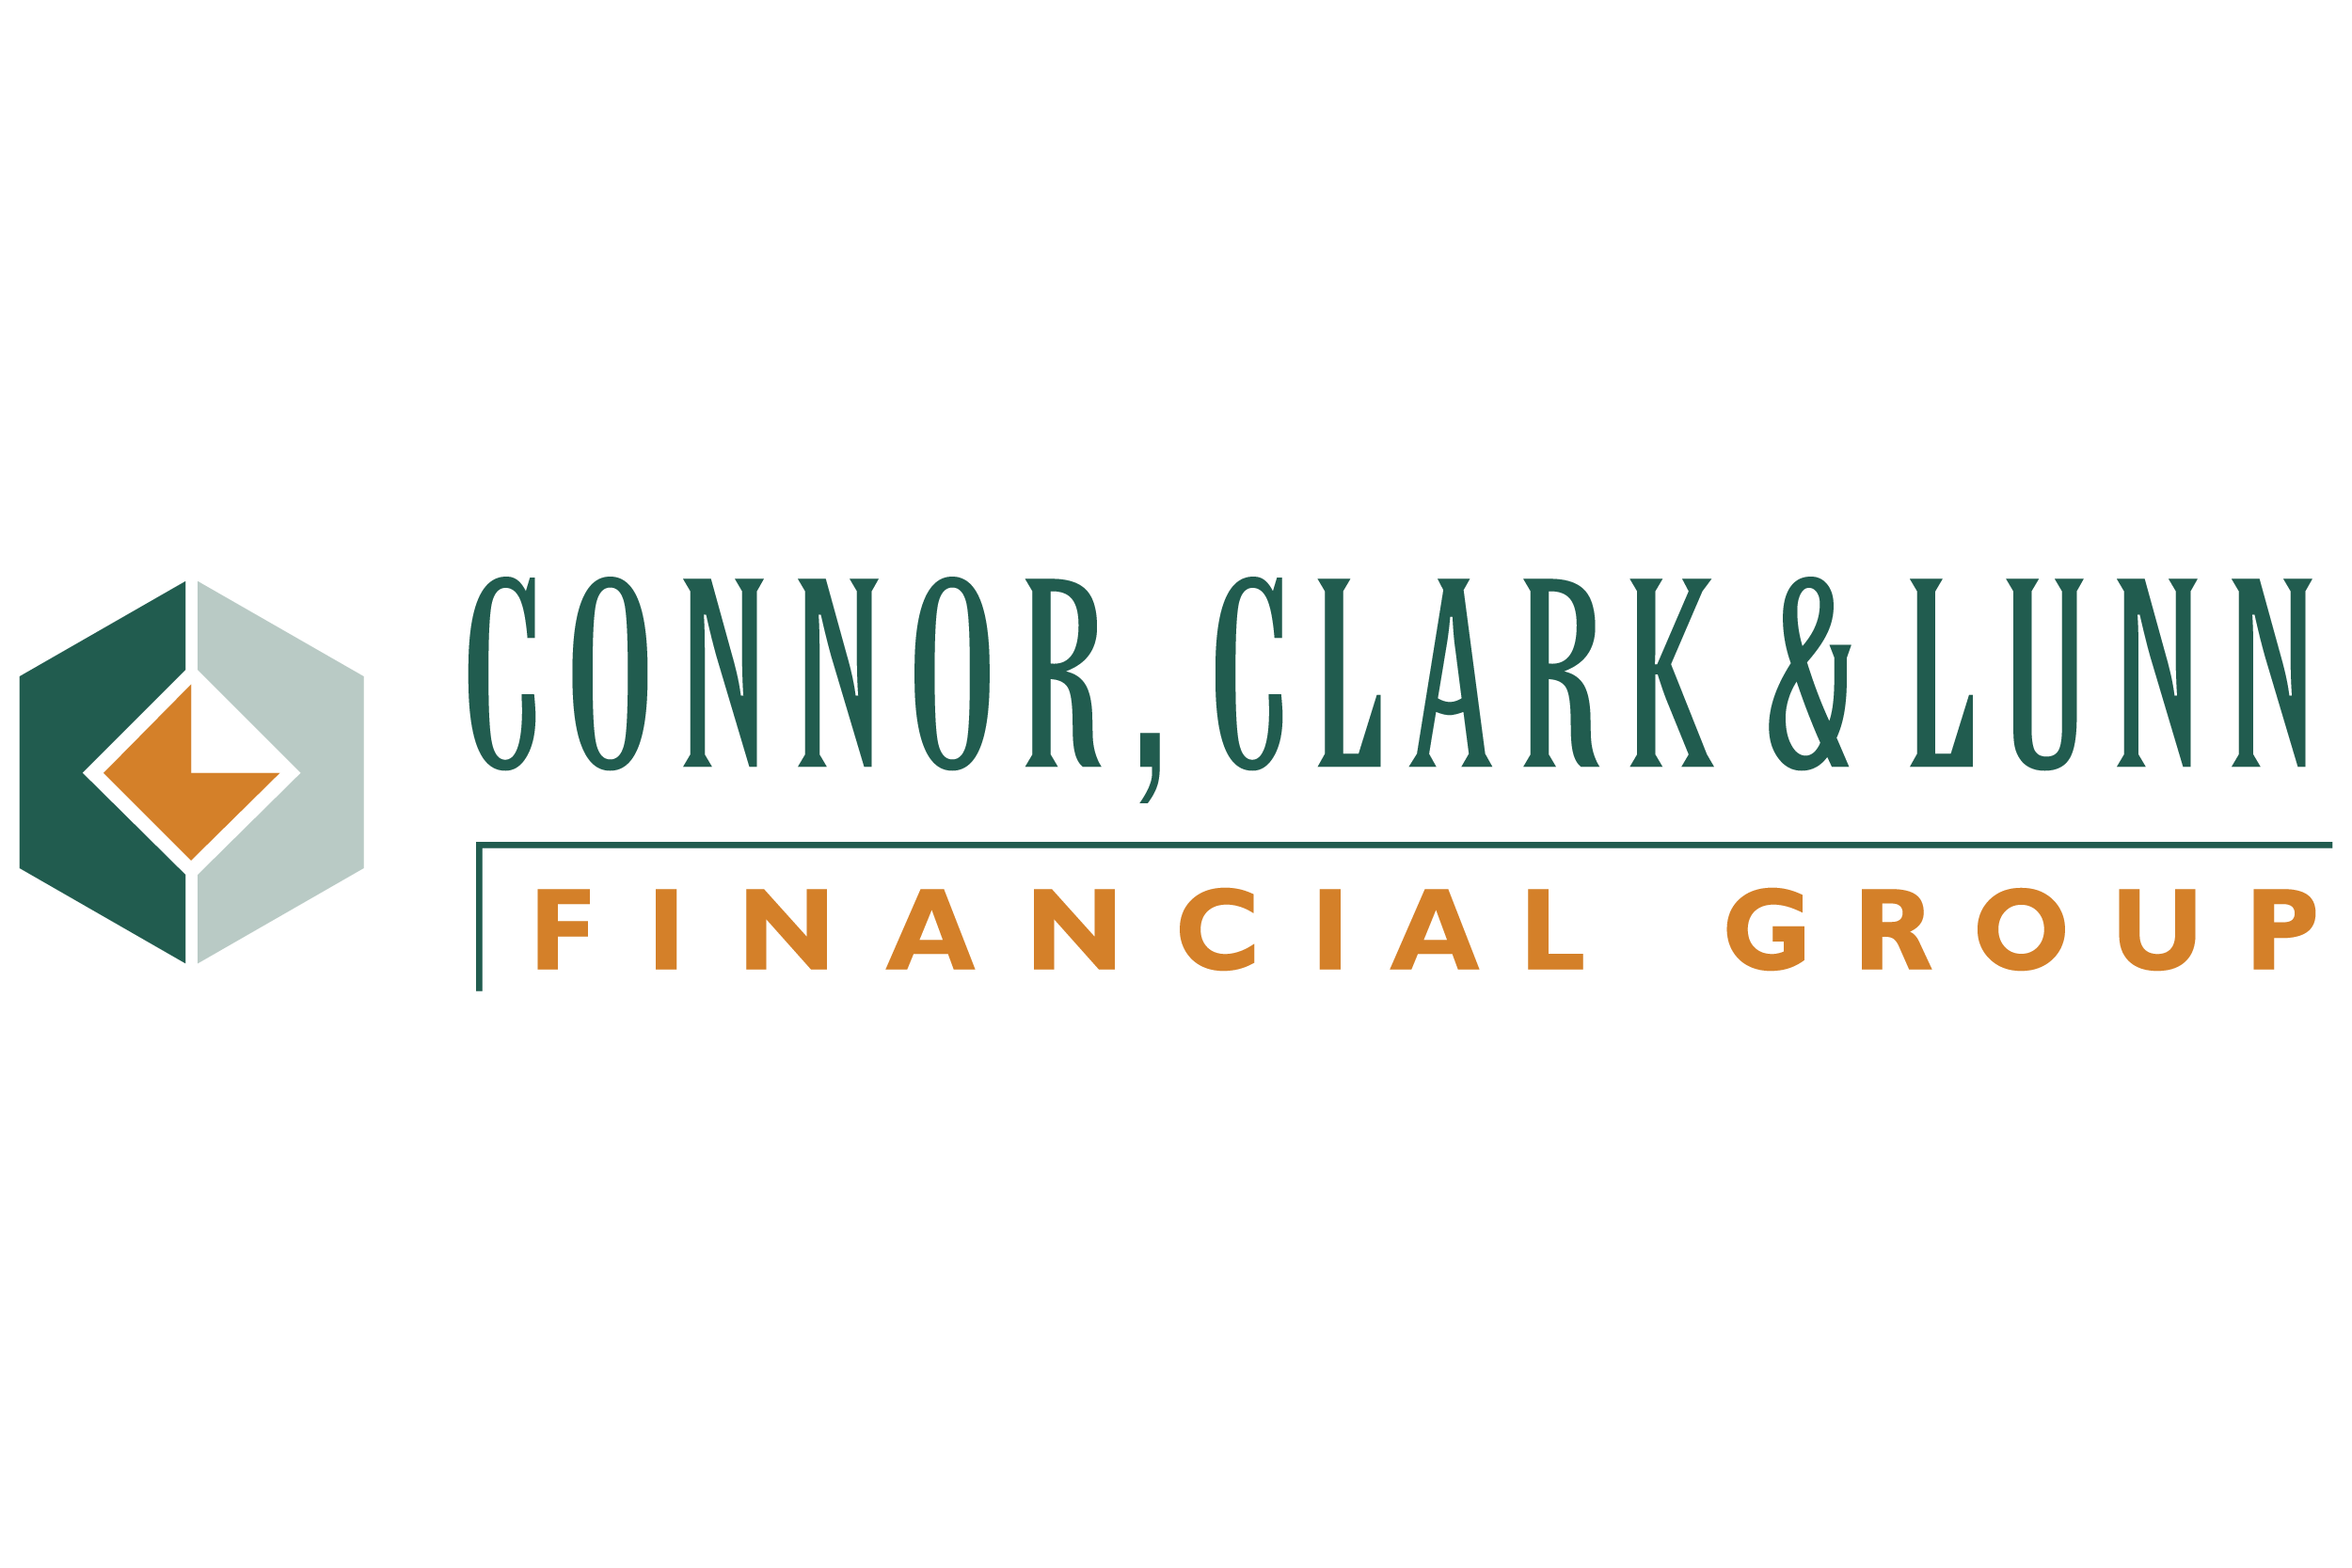 Connor, Clark & Lunn Financial Group Ltd